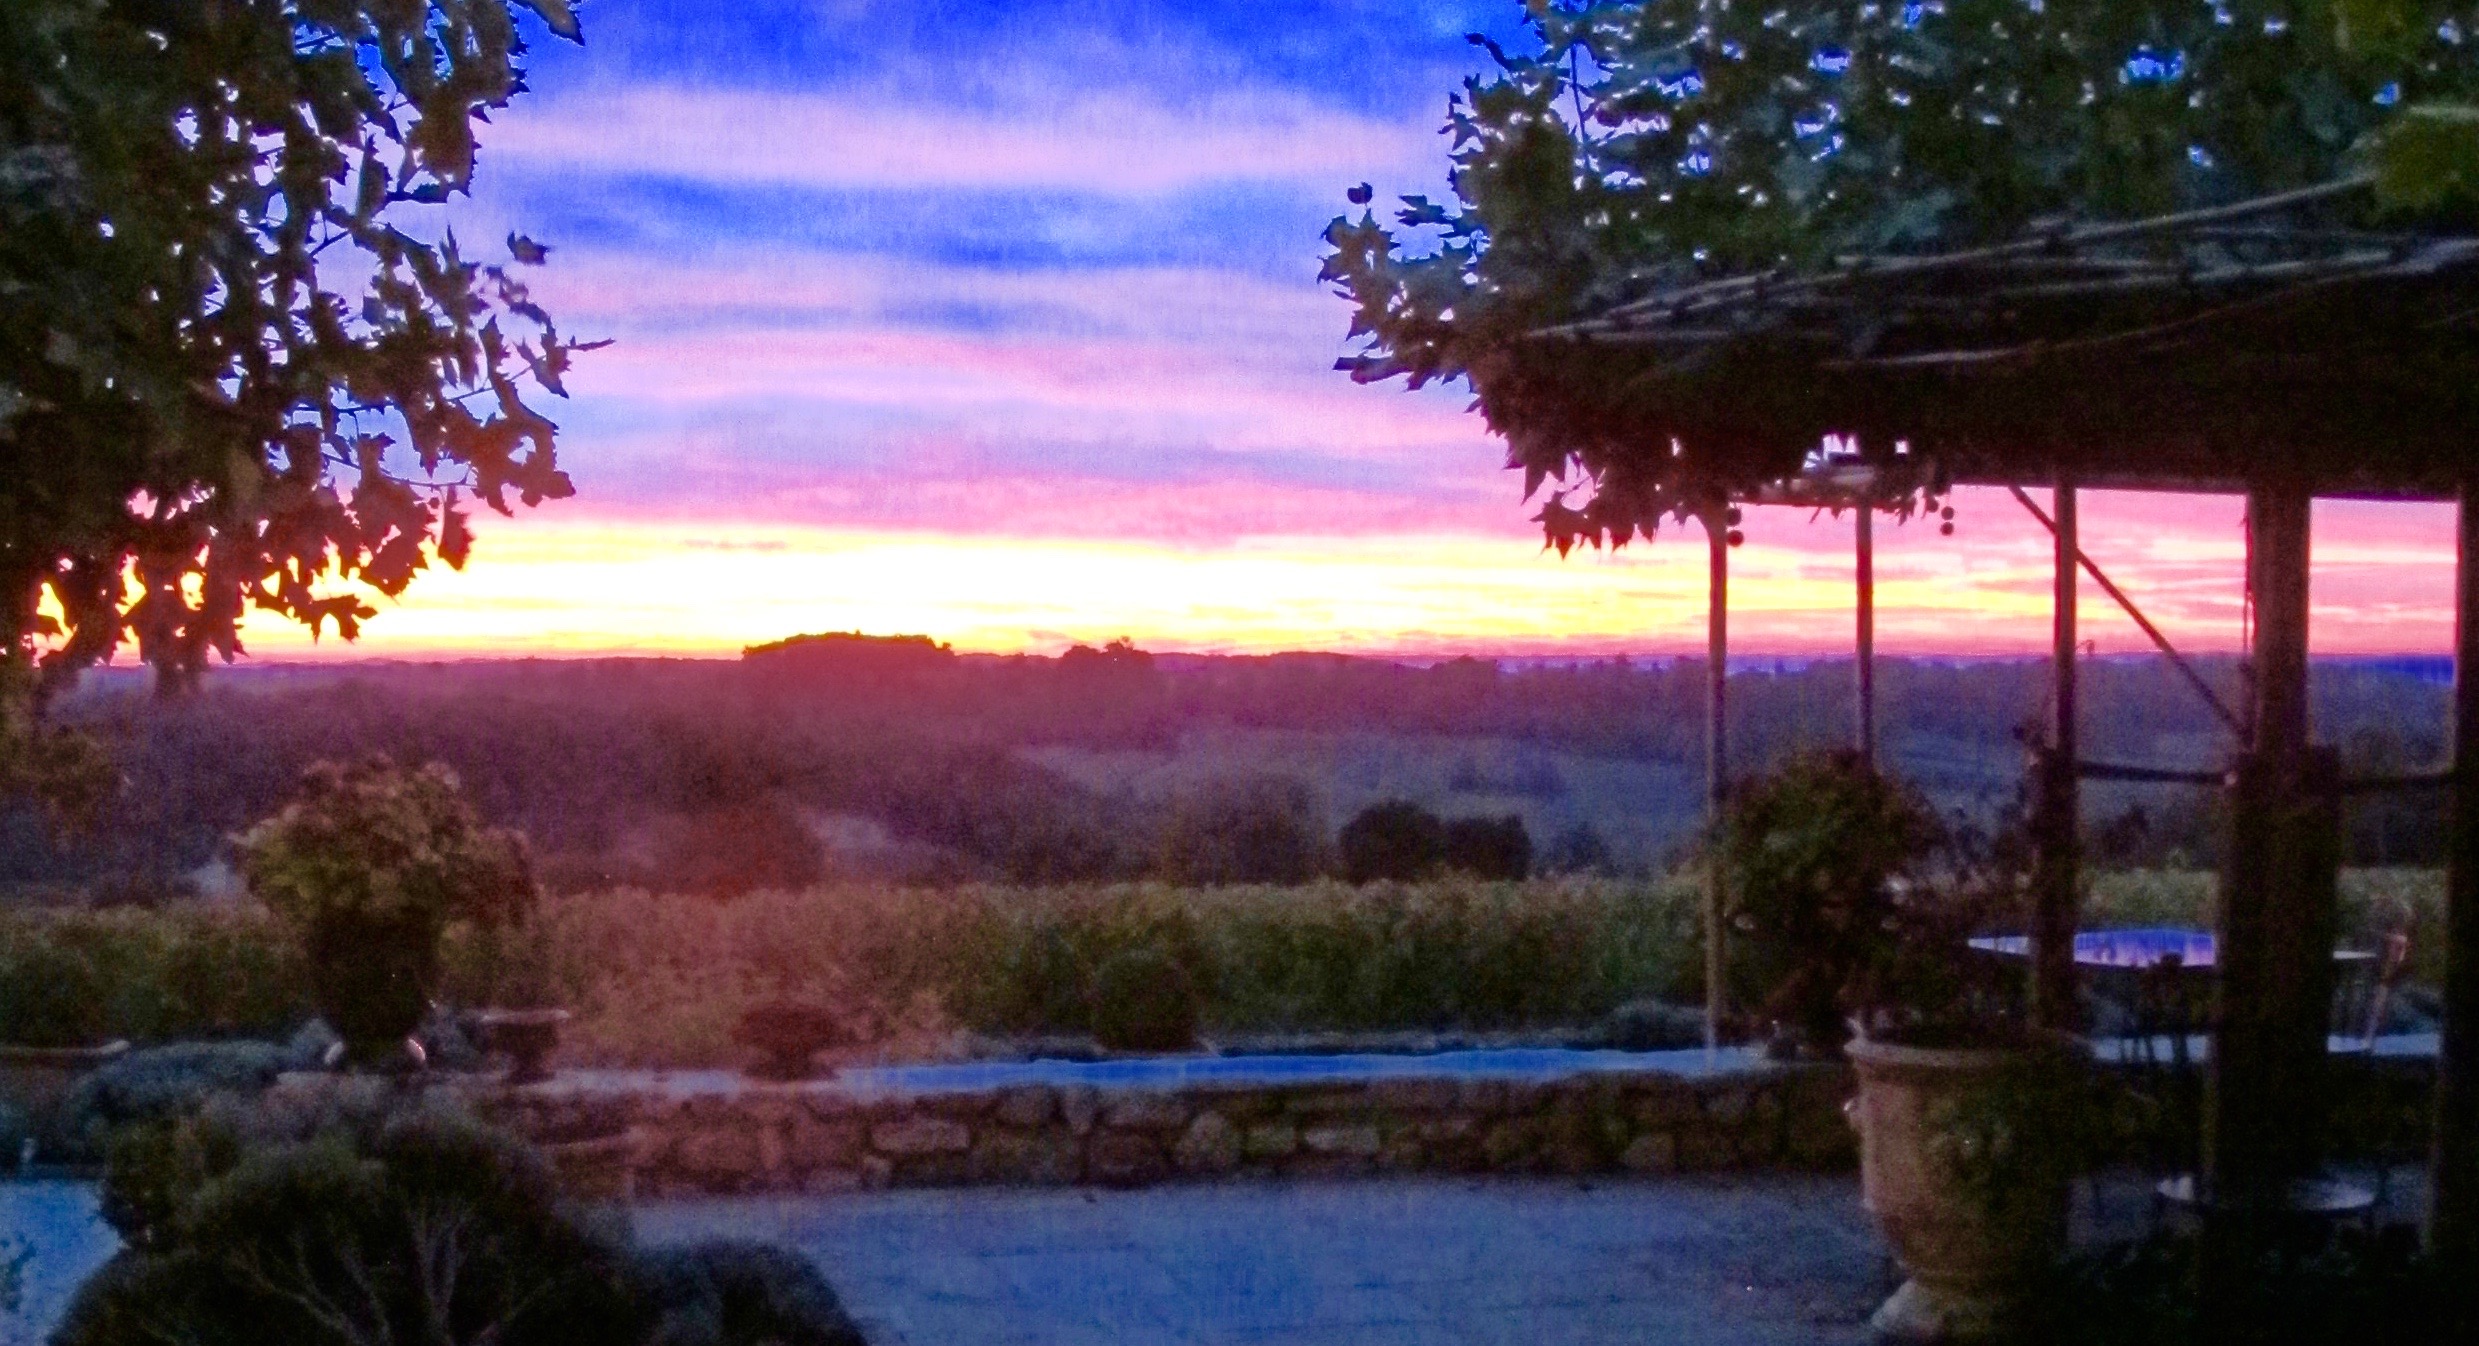 Sunrise at Château Troplong Mondot - unforgettable! Photo by Marla Norman.